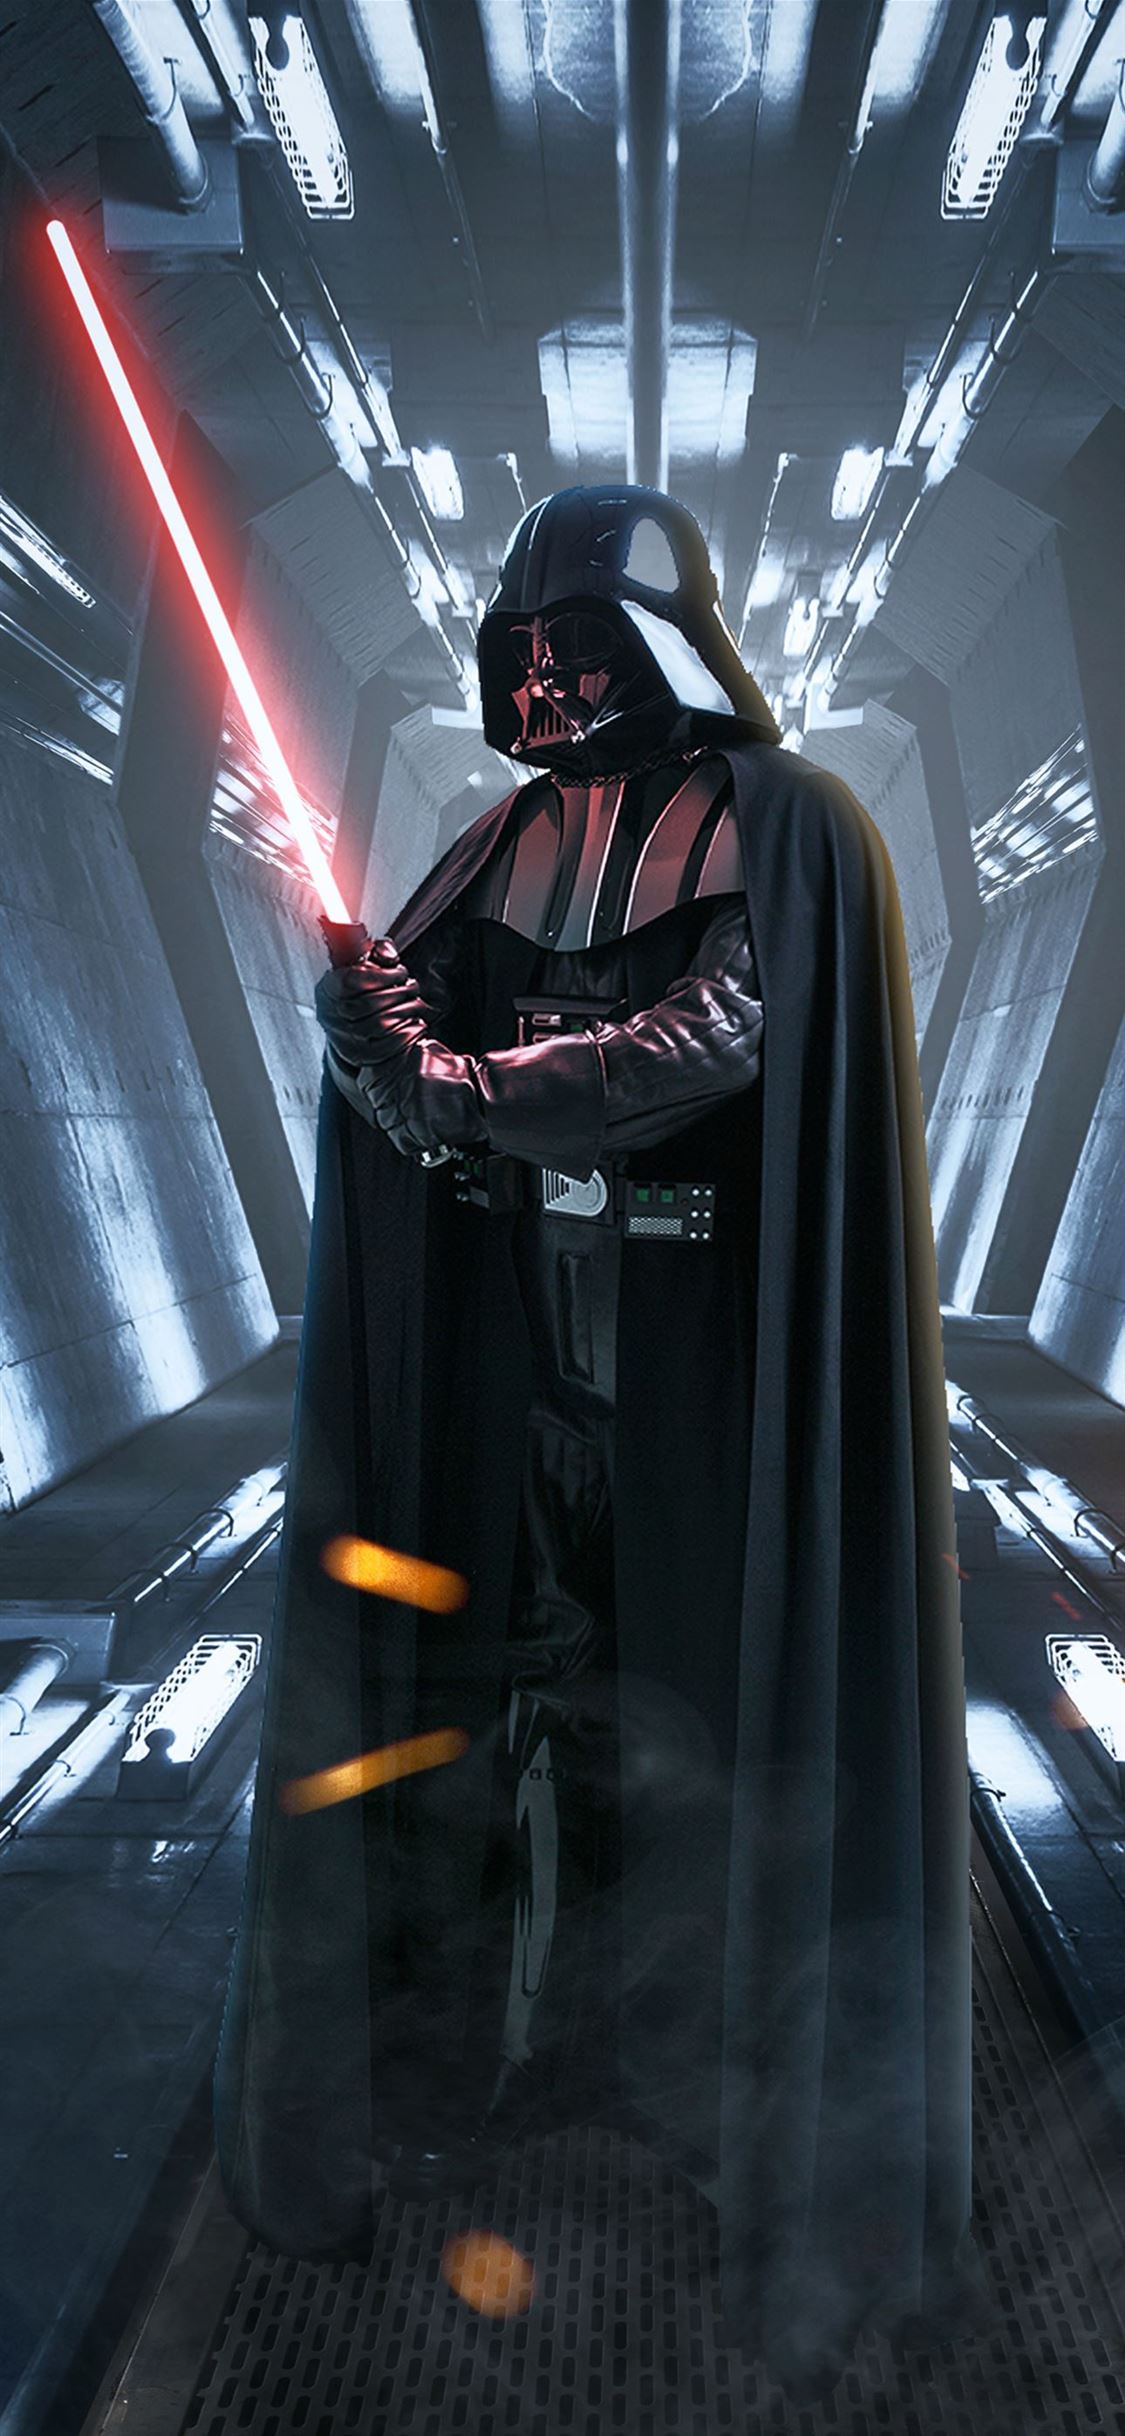 iPhone wallpaper Darth Vader  STAR WARS  Star wars background Vader star  wars Star wars pictures